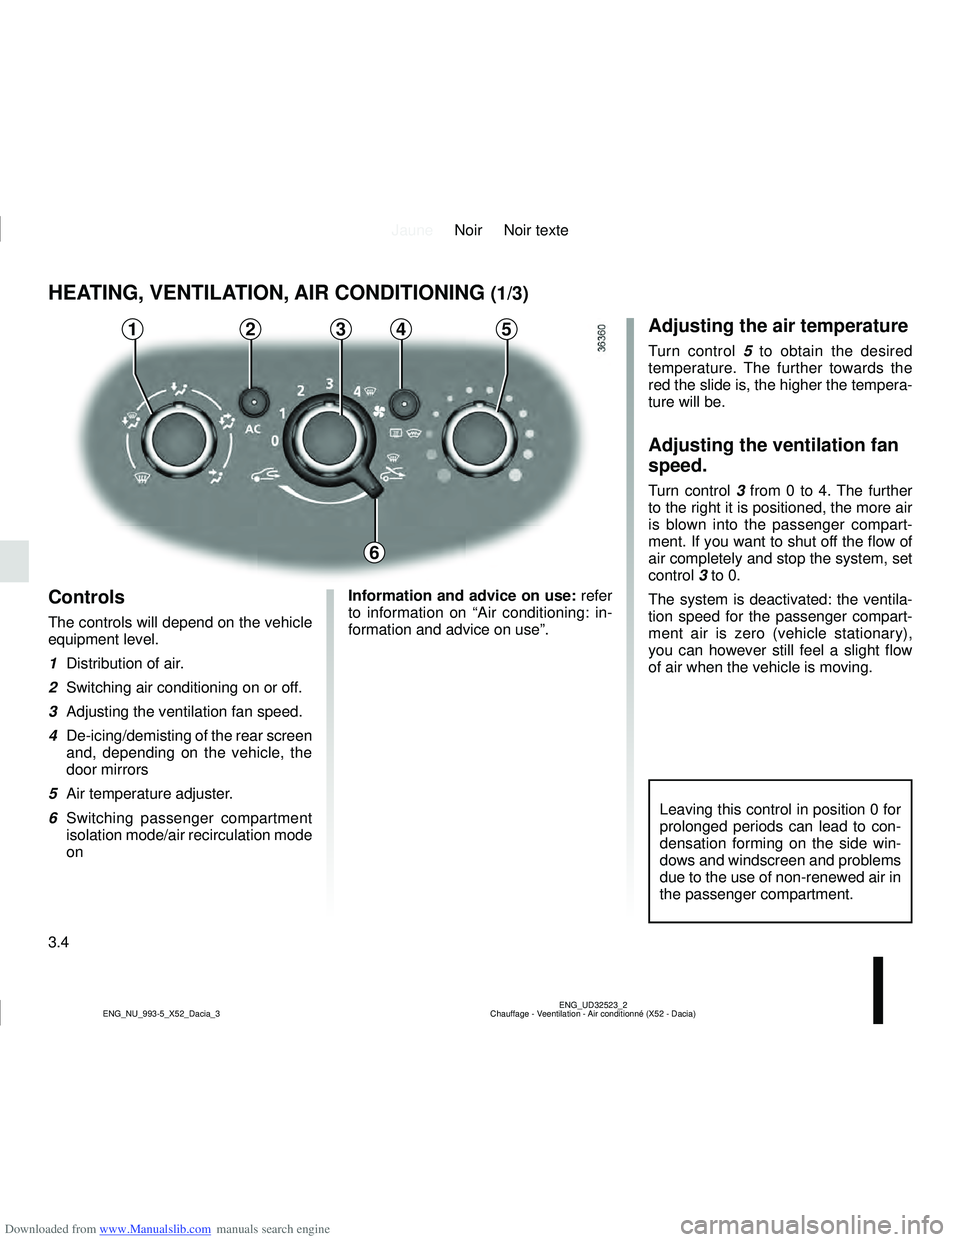 DACIA LOGAN 2015  Owners Manual Downloaded from www.Manualslib.com manuals search engine JauneNoir Noir texte
3.4
ENG_UD32523_2
Chauffage - Veentilation - Air conditionné (X52 - Dacia)
ENG_NU_993-5_X52_Dacia_3
HEATING, VENTILATION,